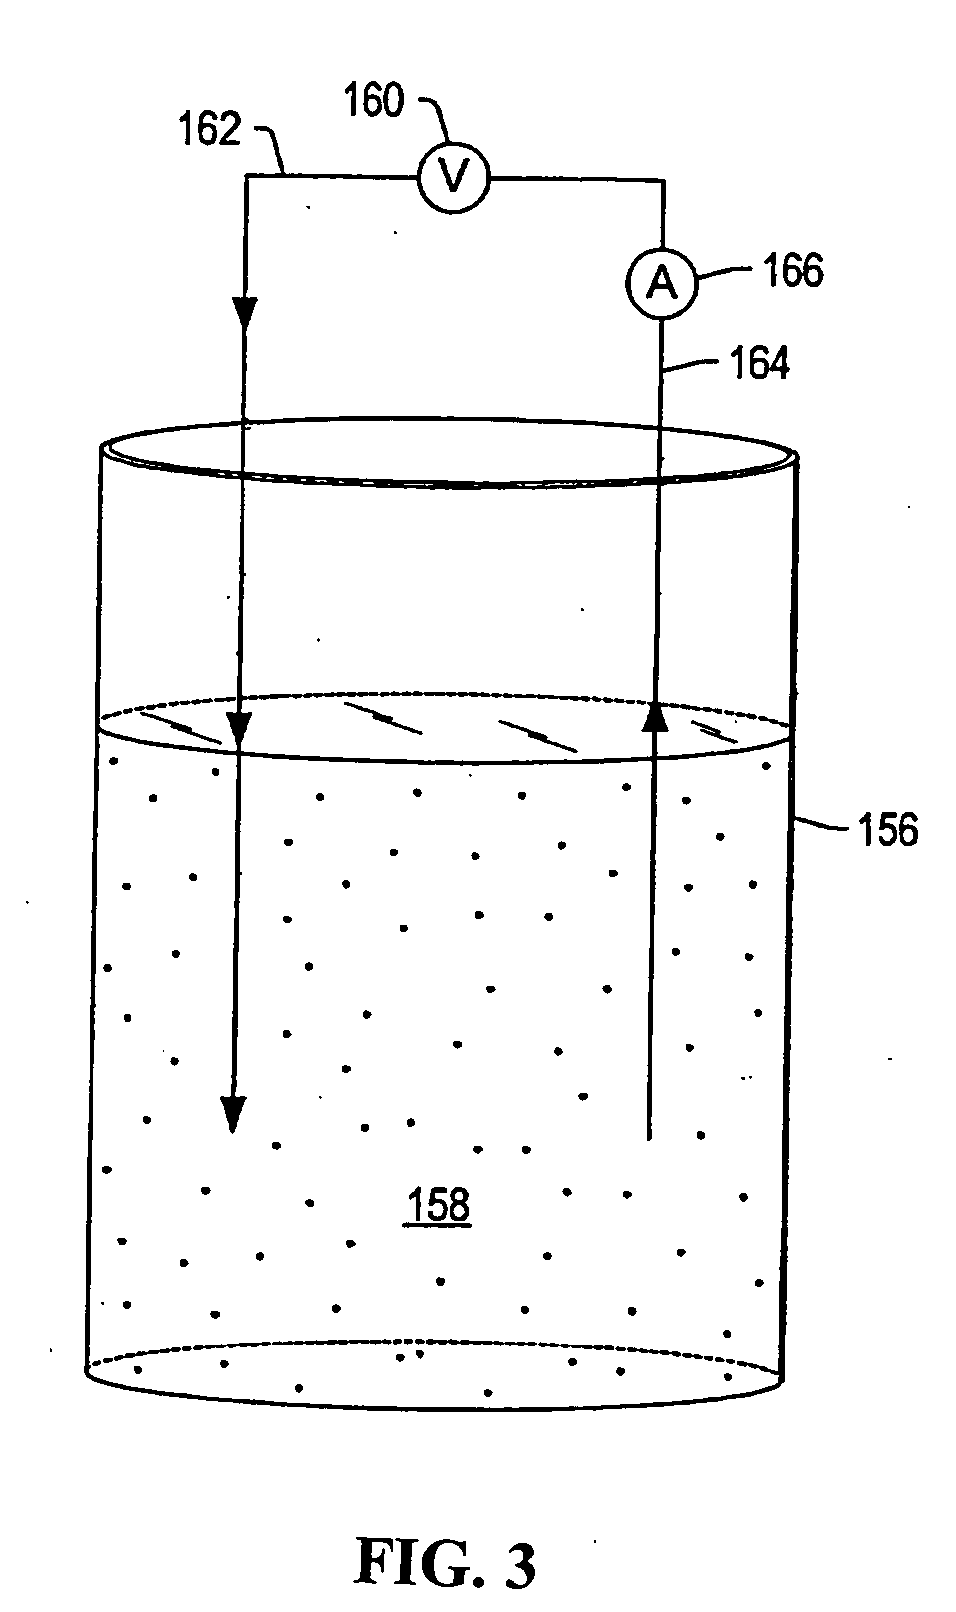 Method of decomposing polymer